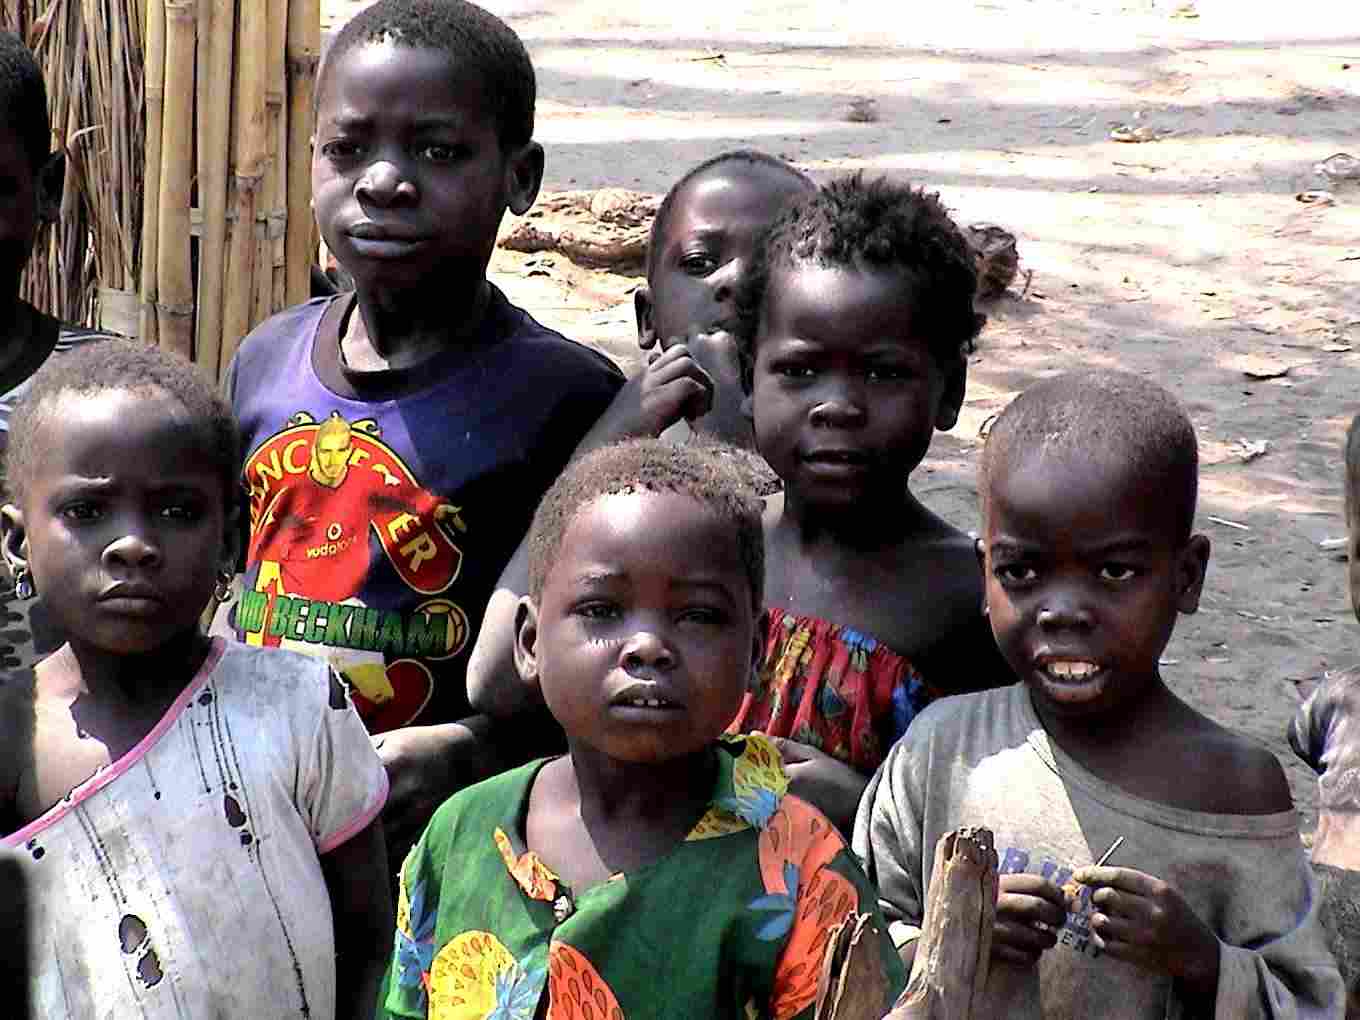 School children in Zambia